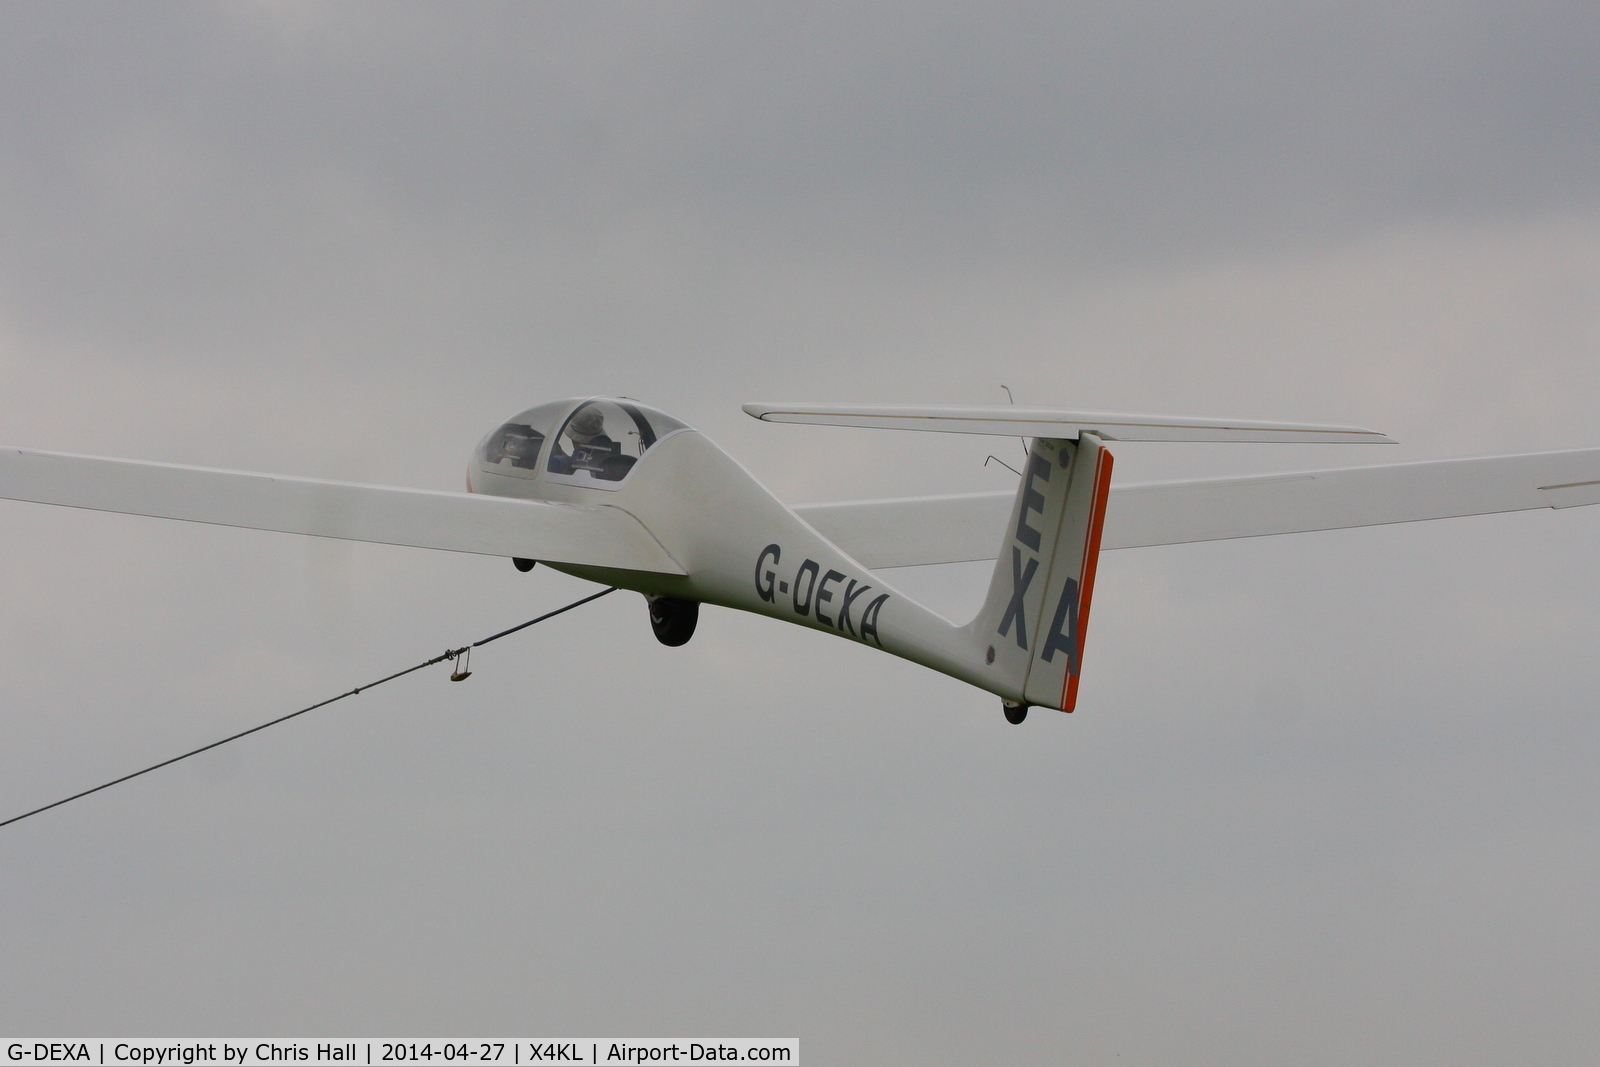 G-DEXA, 1984 Grob G-103A Viking TX1 C/N 33908-K-143, Trent Valley Gliding Club, Kirton in Lindsay